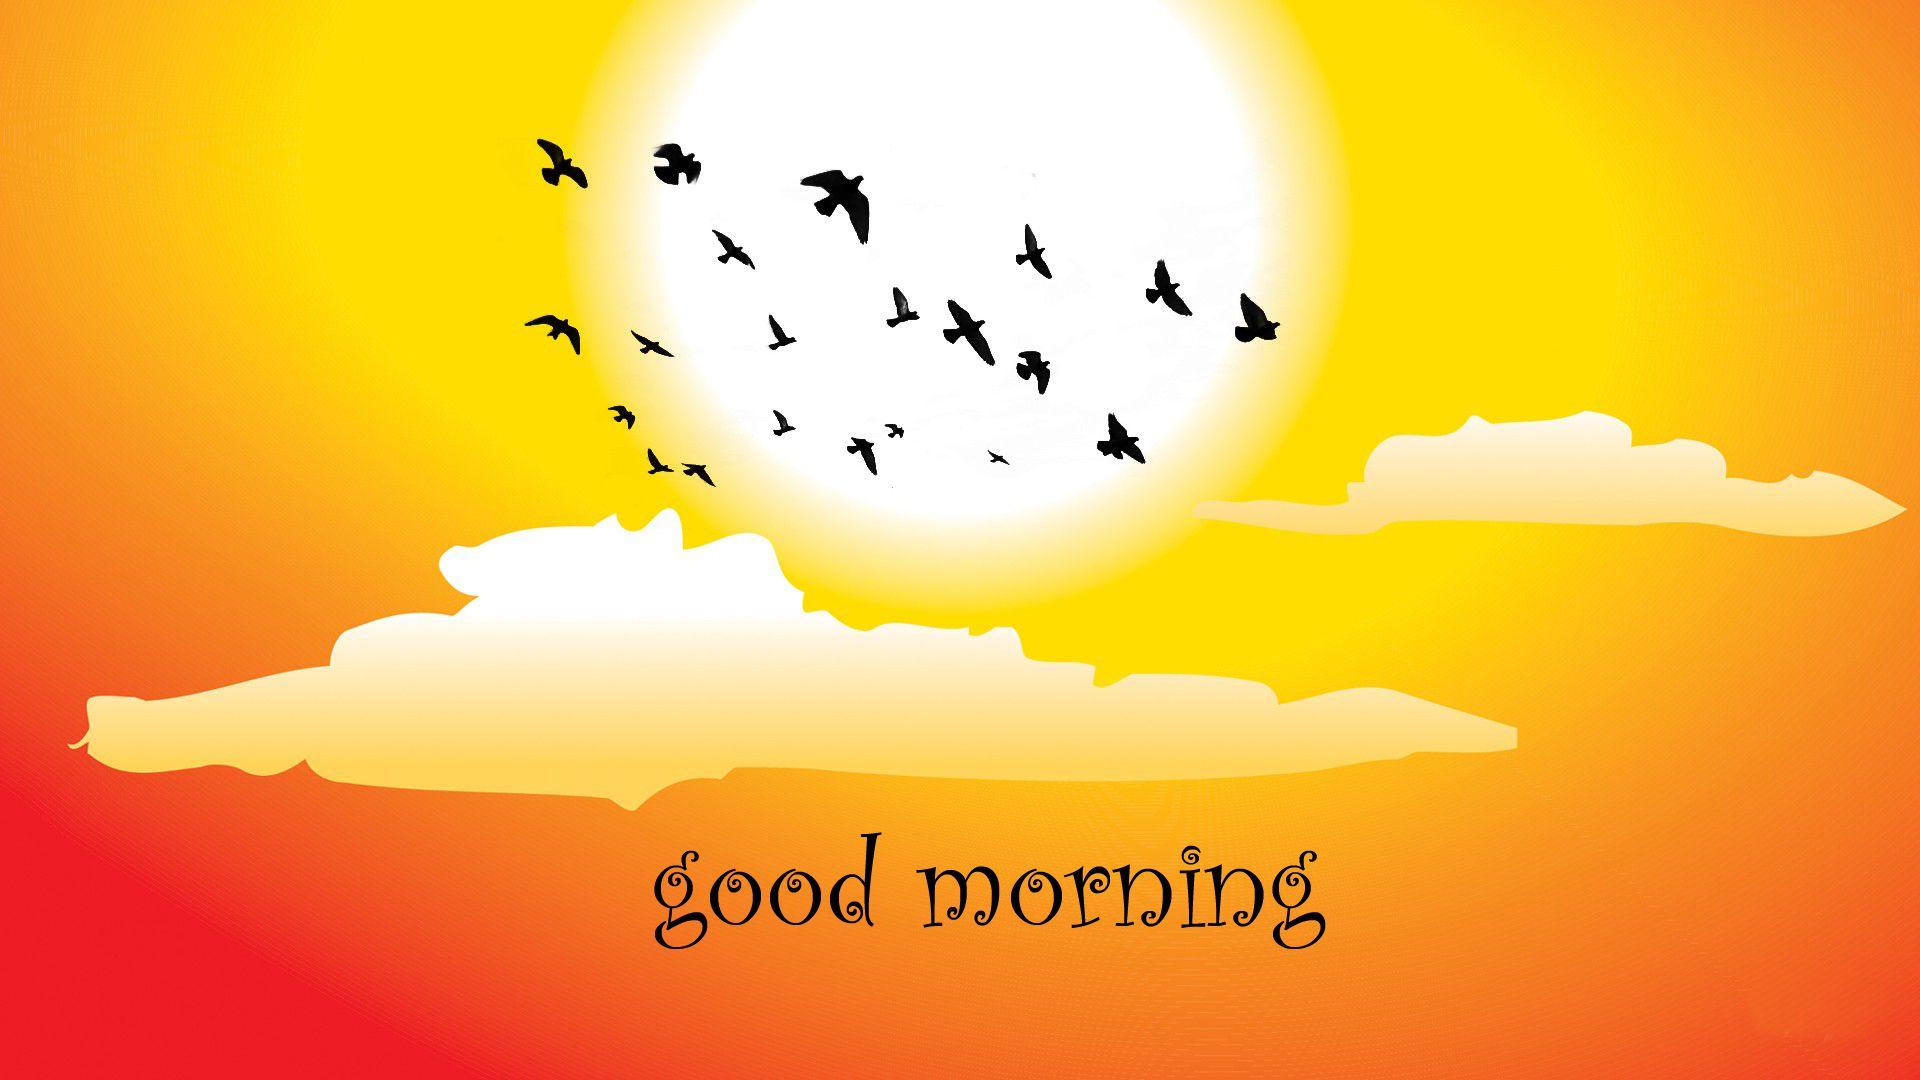 Beautiful Good Morning Wallpaper Image And Photo Free